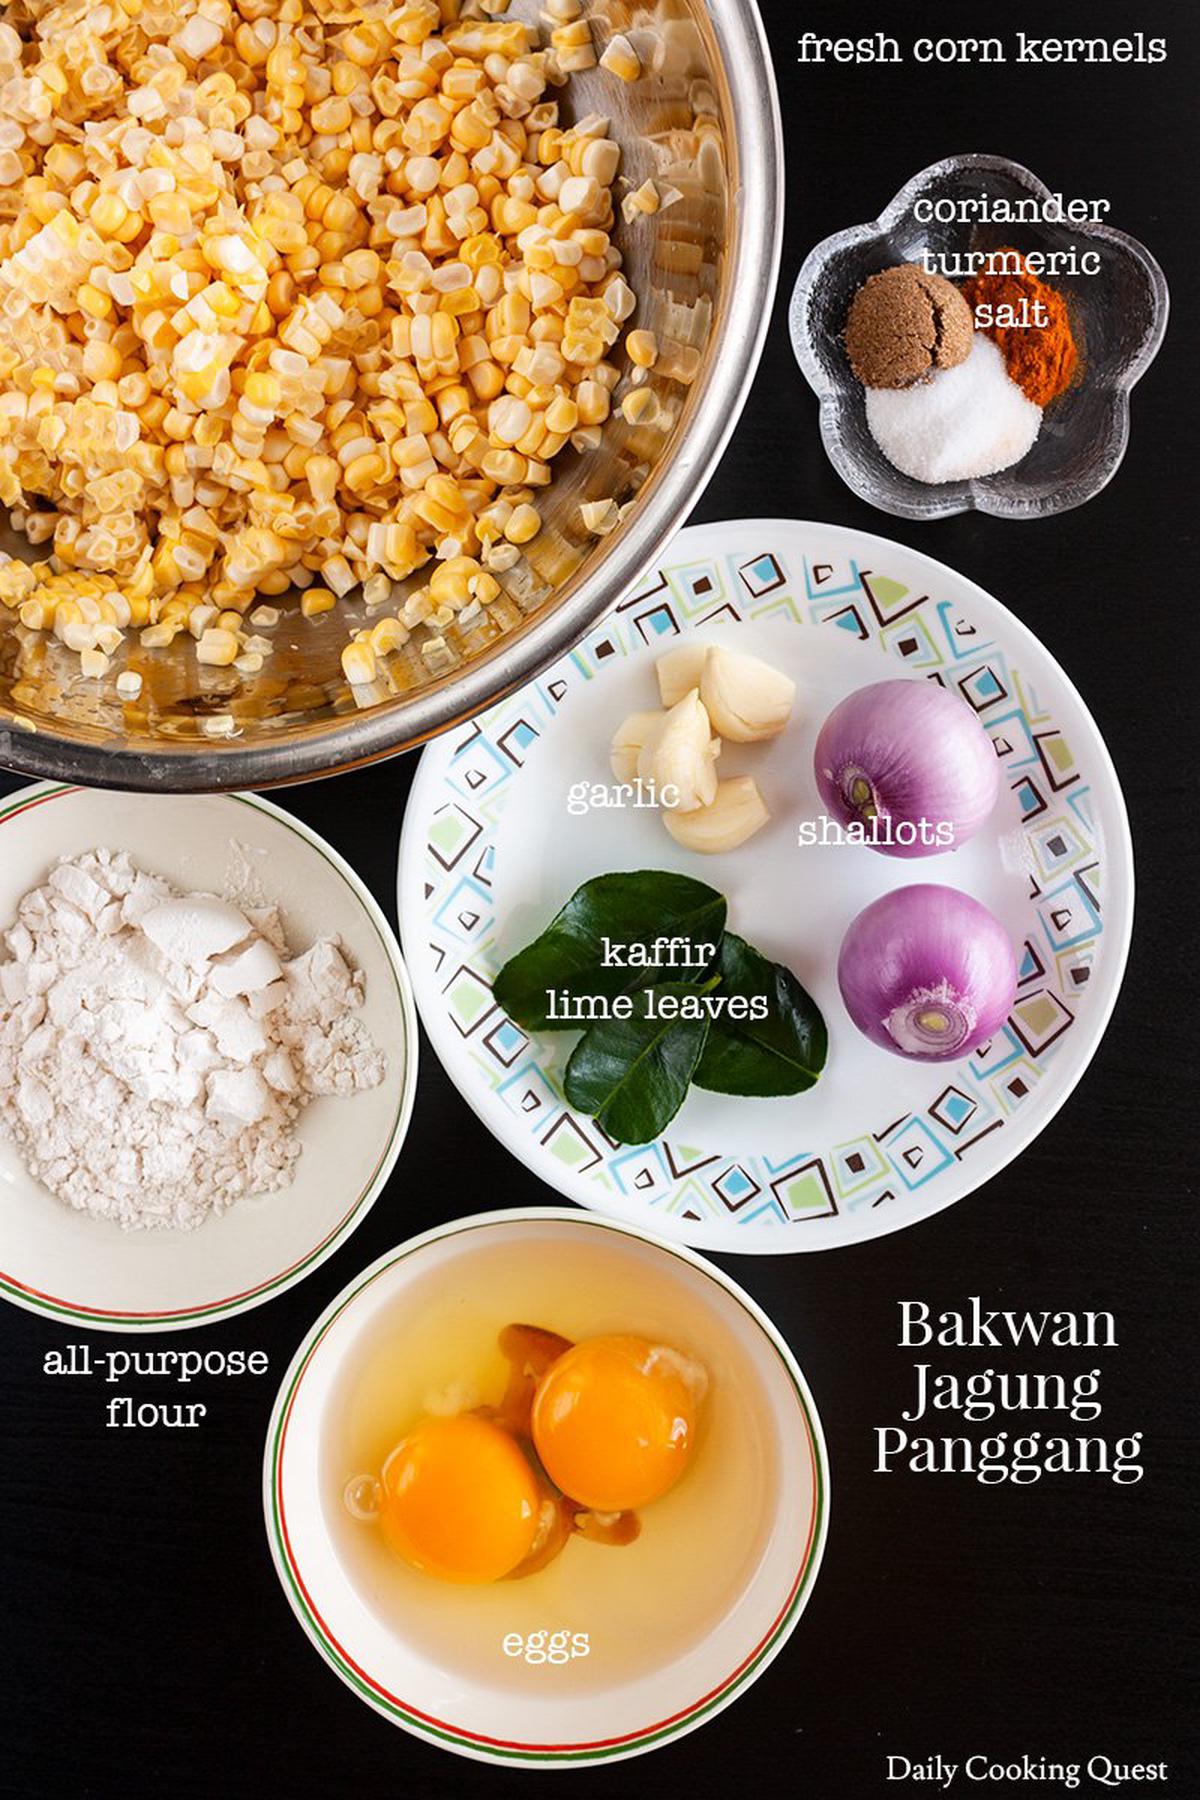 Bakwan Jagung Panggang - Baked Corn Fritters